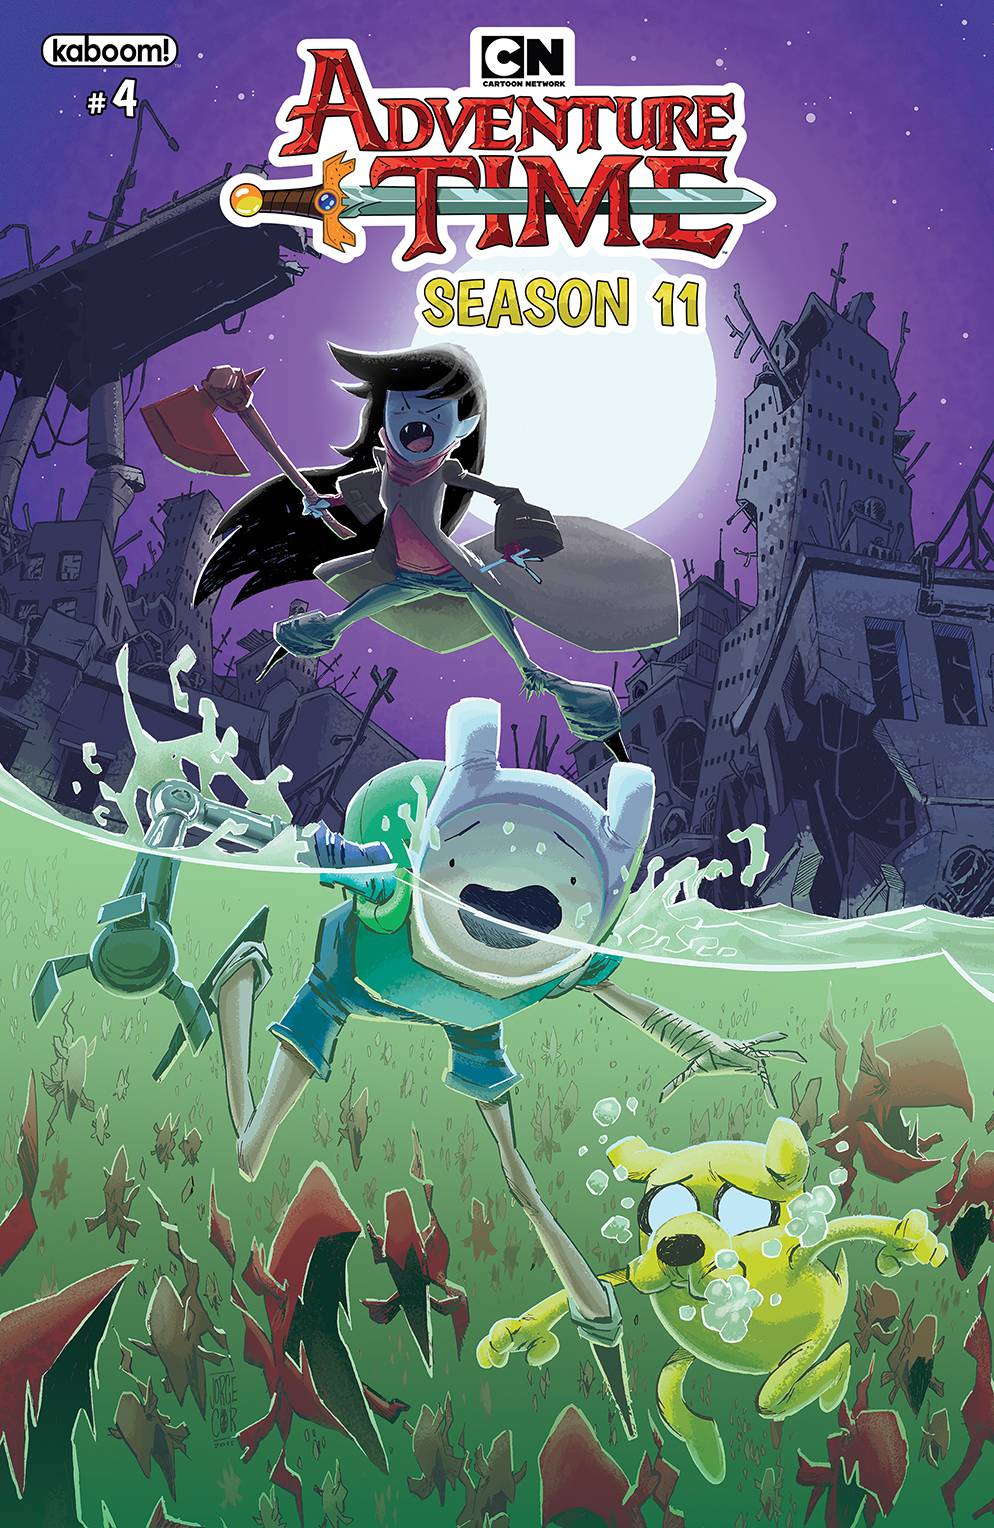 Adventure time comics season 11